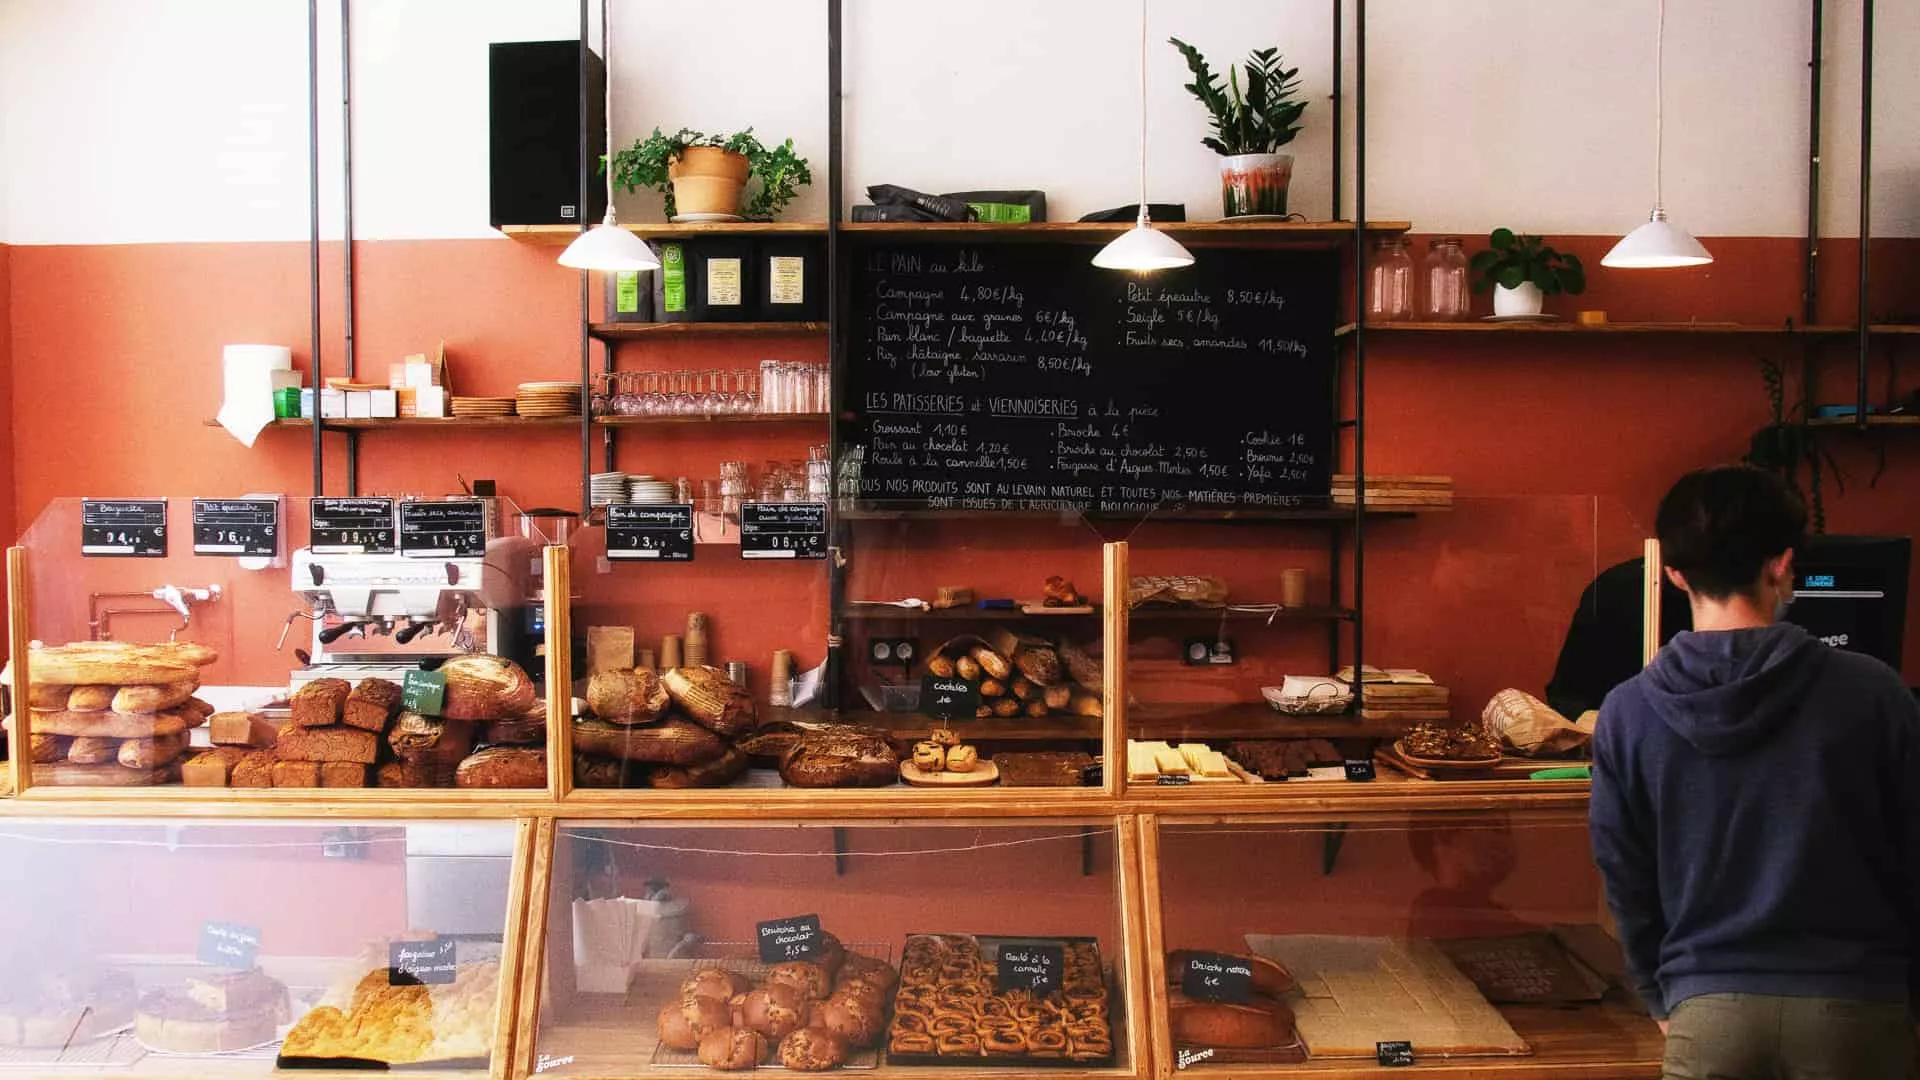 Boulangerie de La Source in France, europe | Baked Goods,Sweets - Country Helper